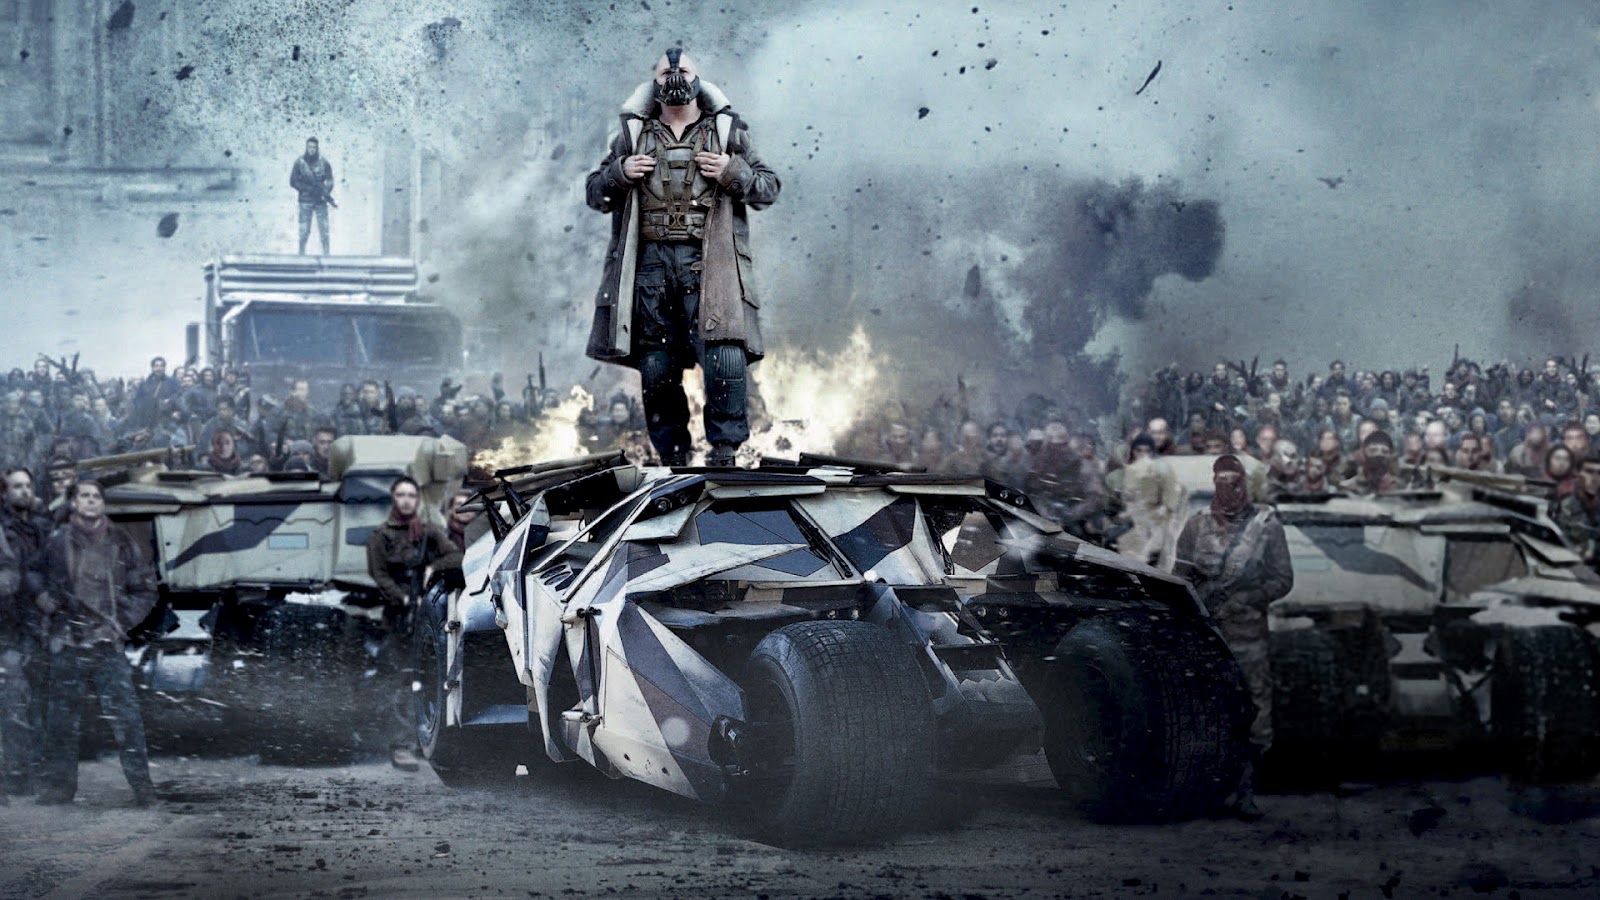 Bane Dark Knight Rises HD Wallpaper In